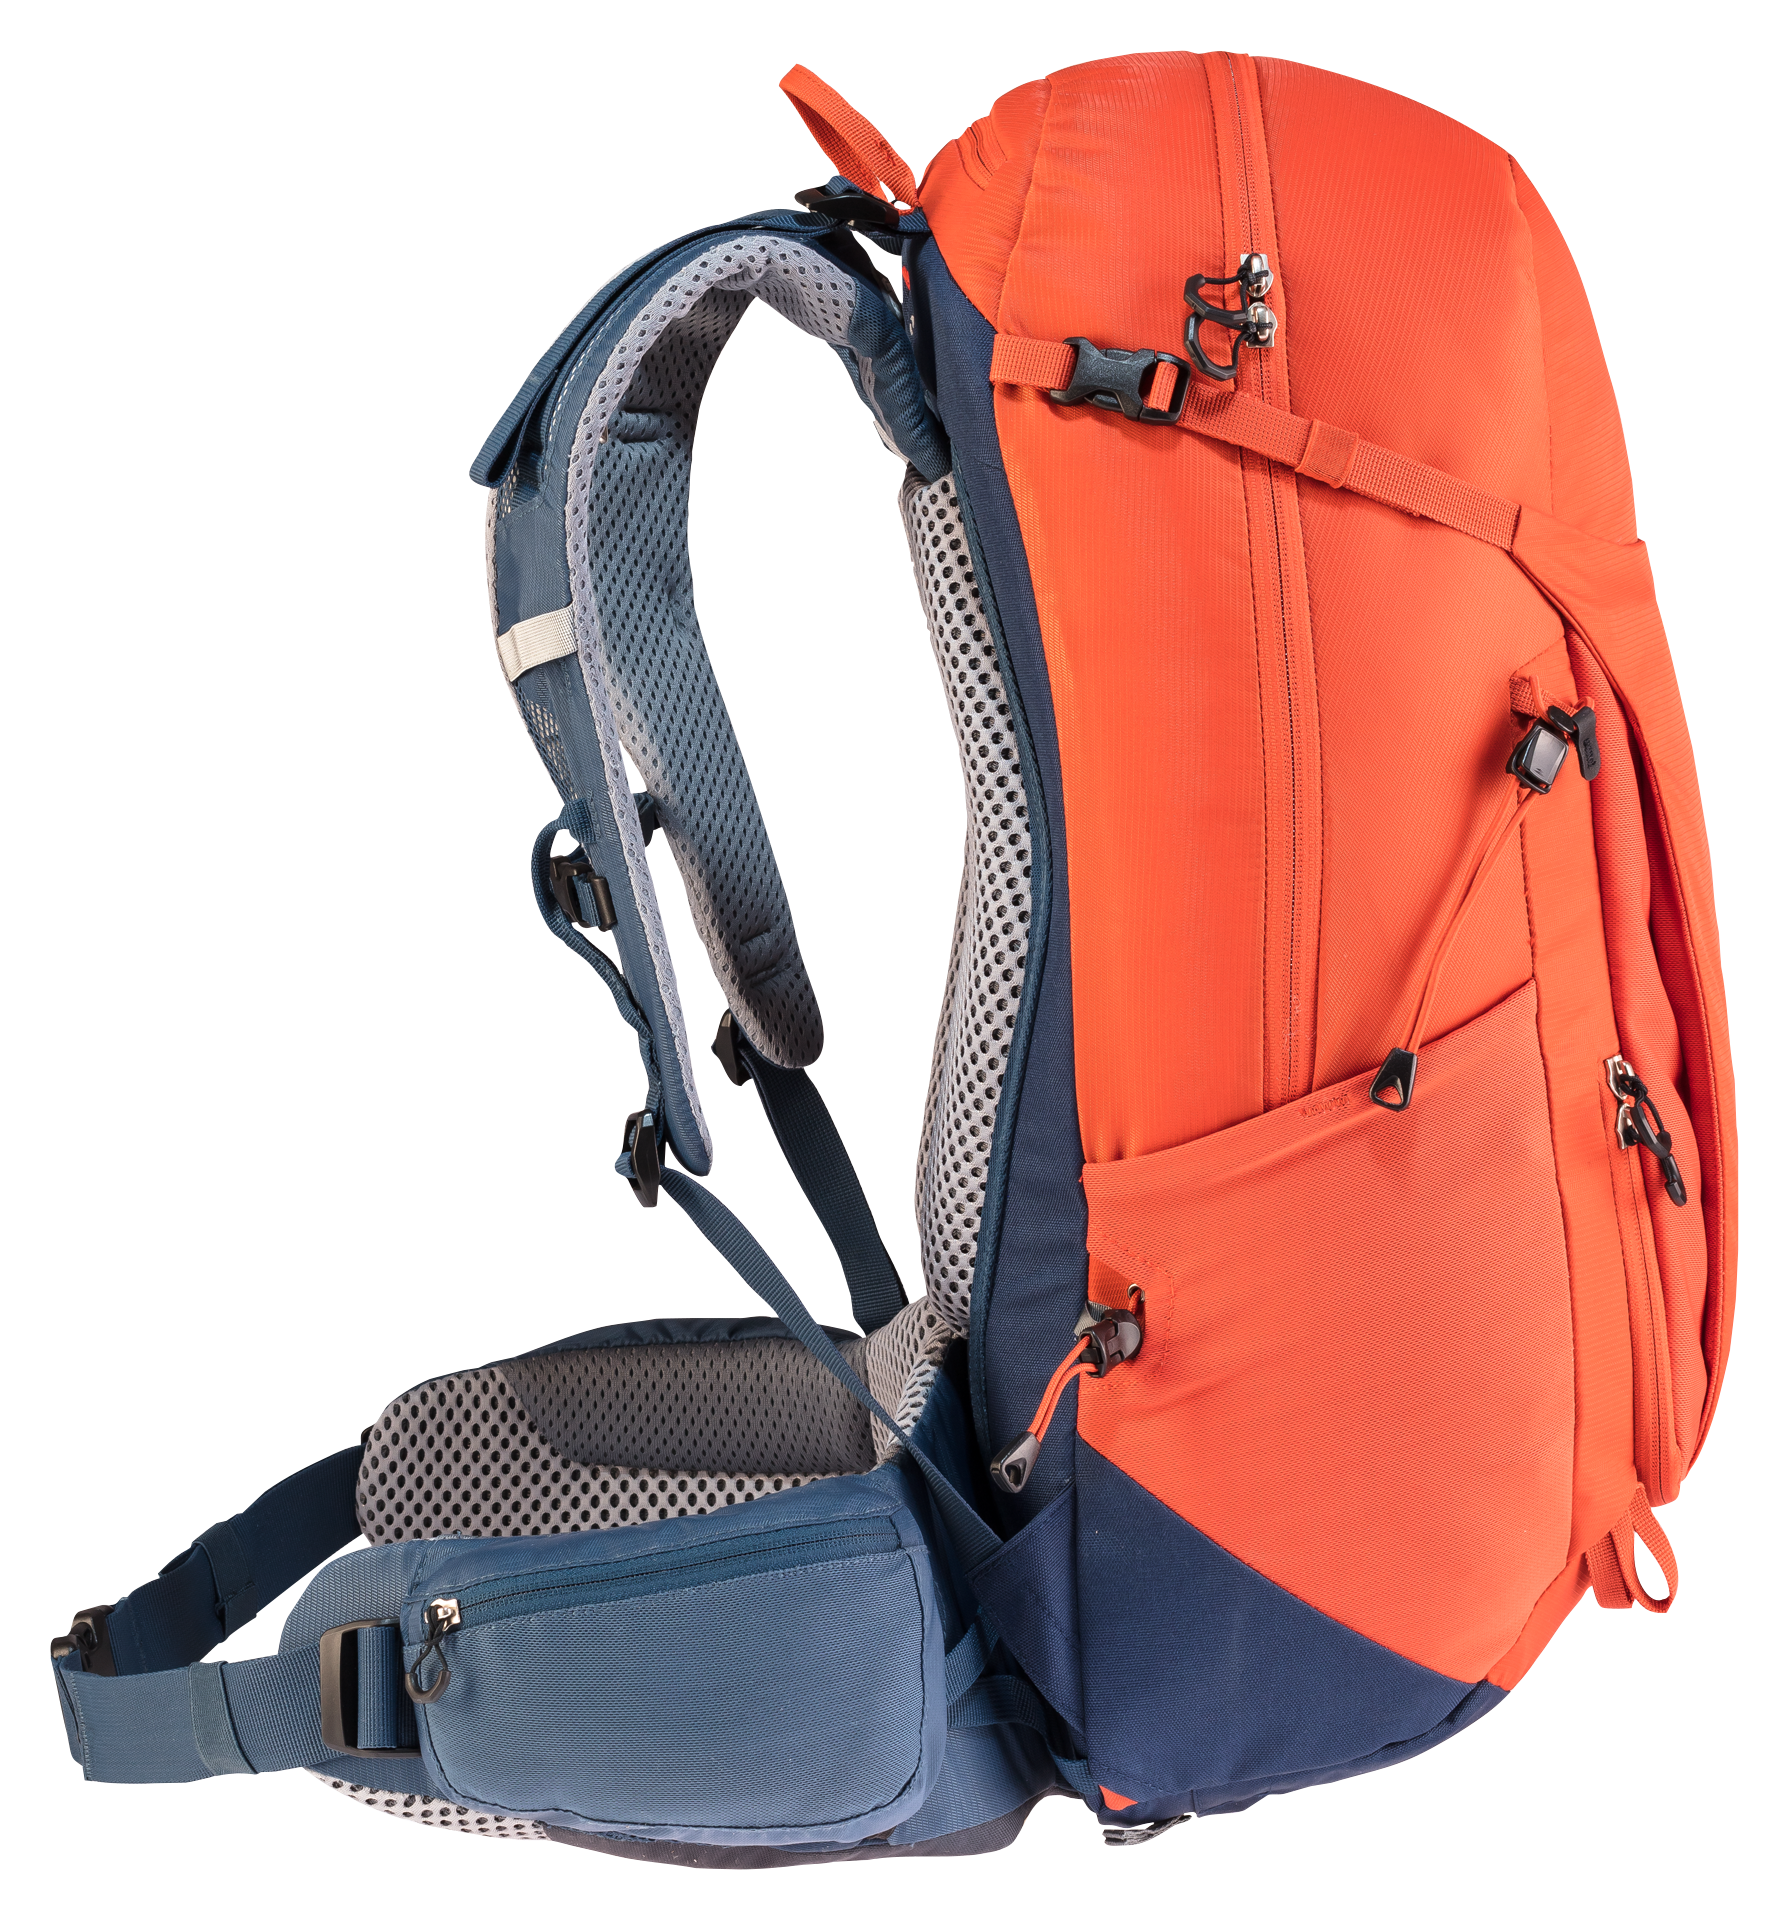 deuter Trail Pro 32 | Hiking backpack